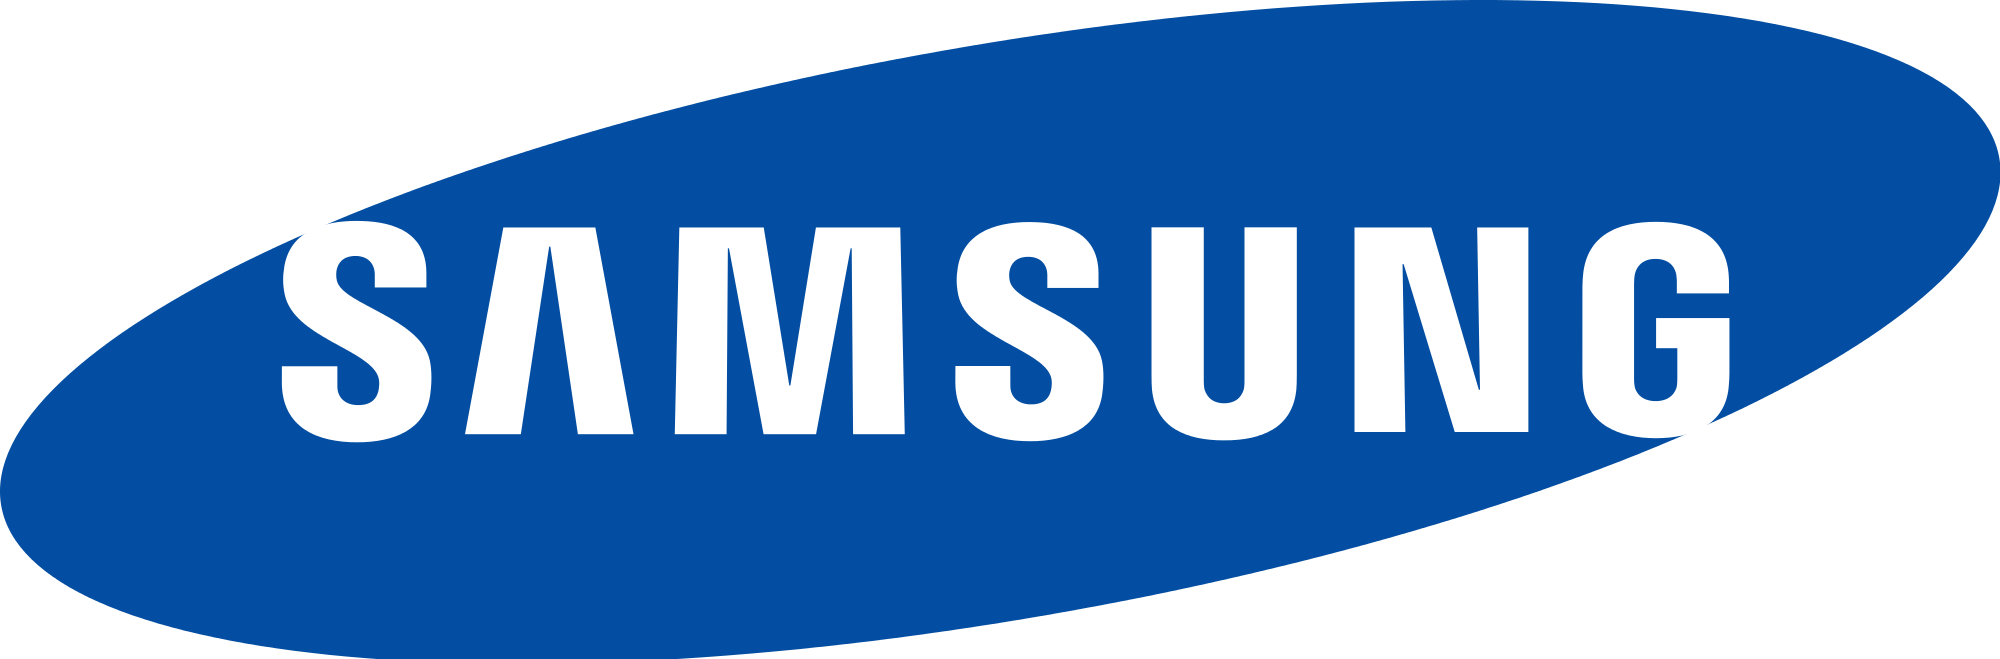 samsung_logo-svg